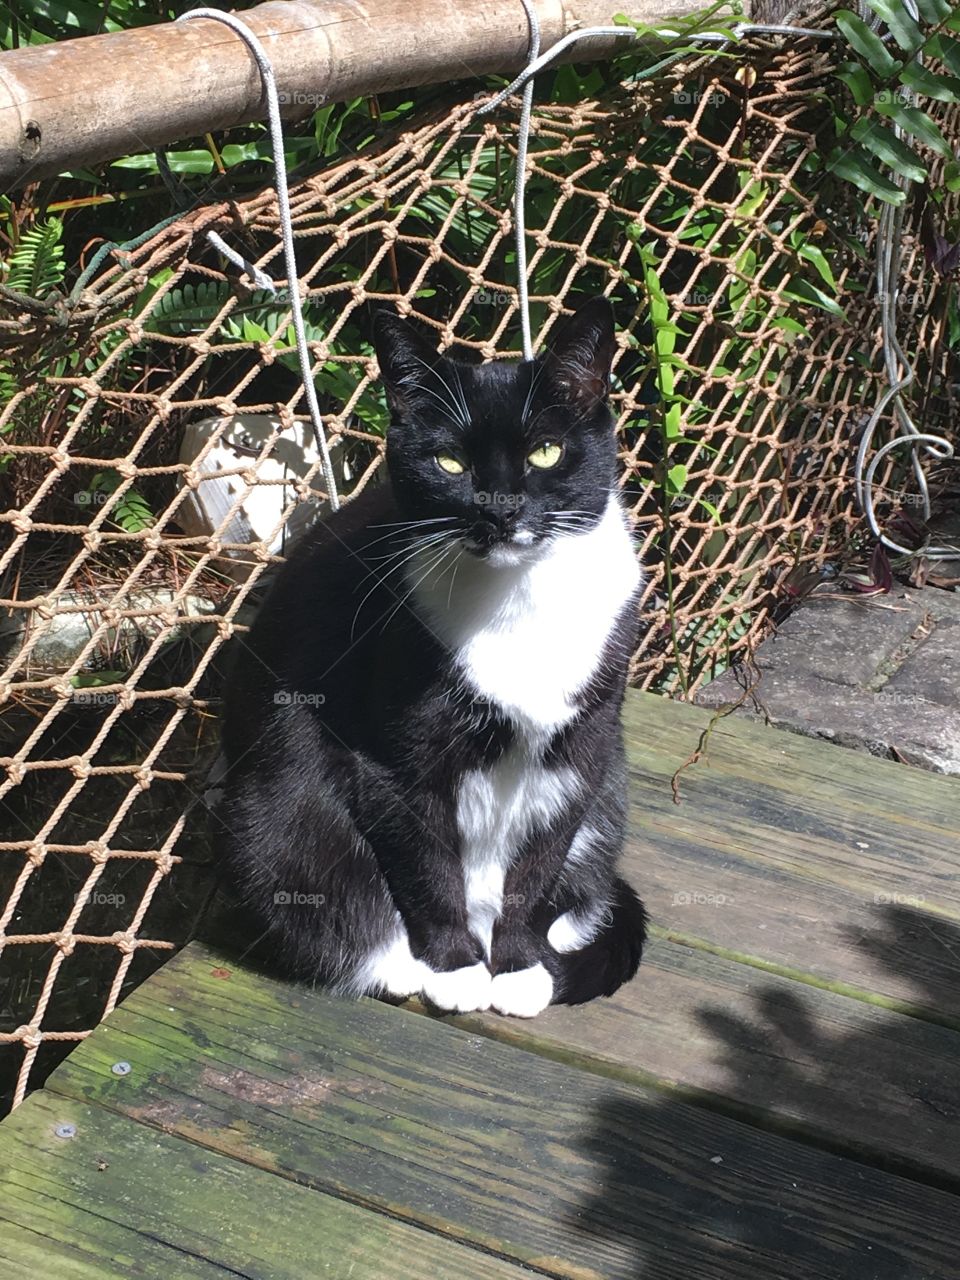 Sunbathing cat on a bridge